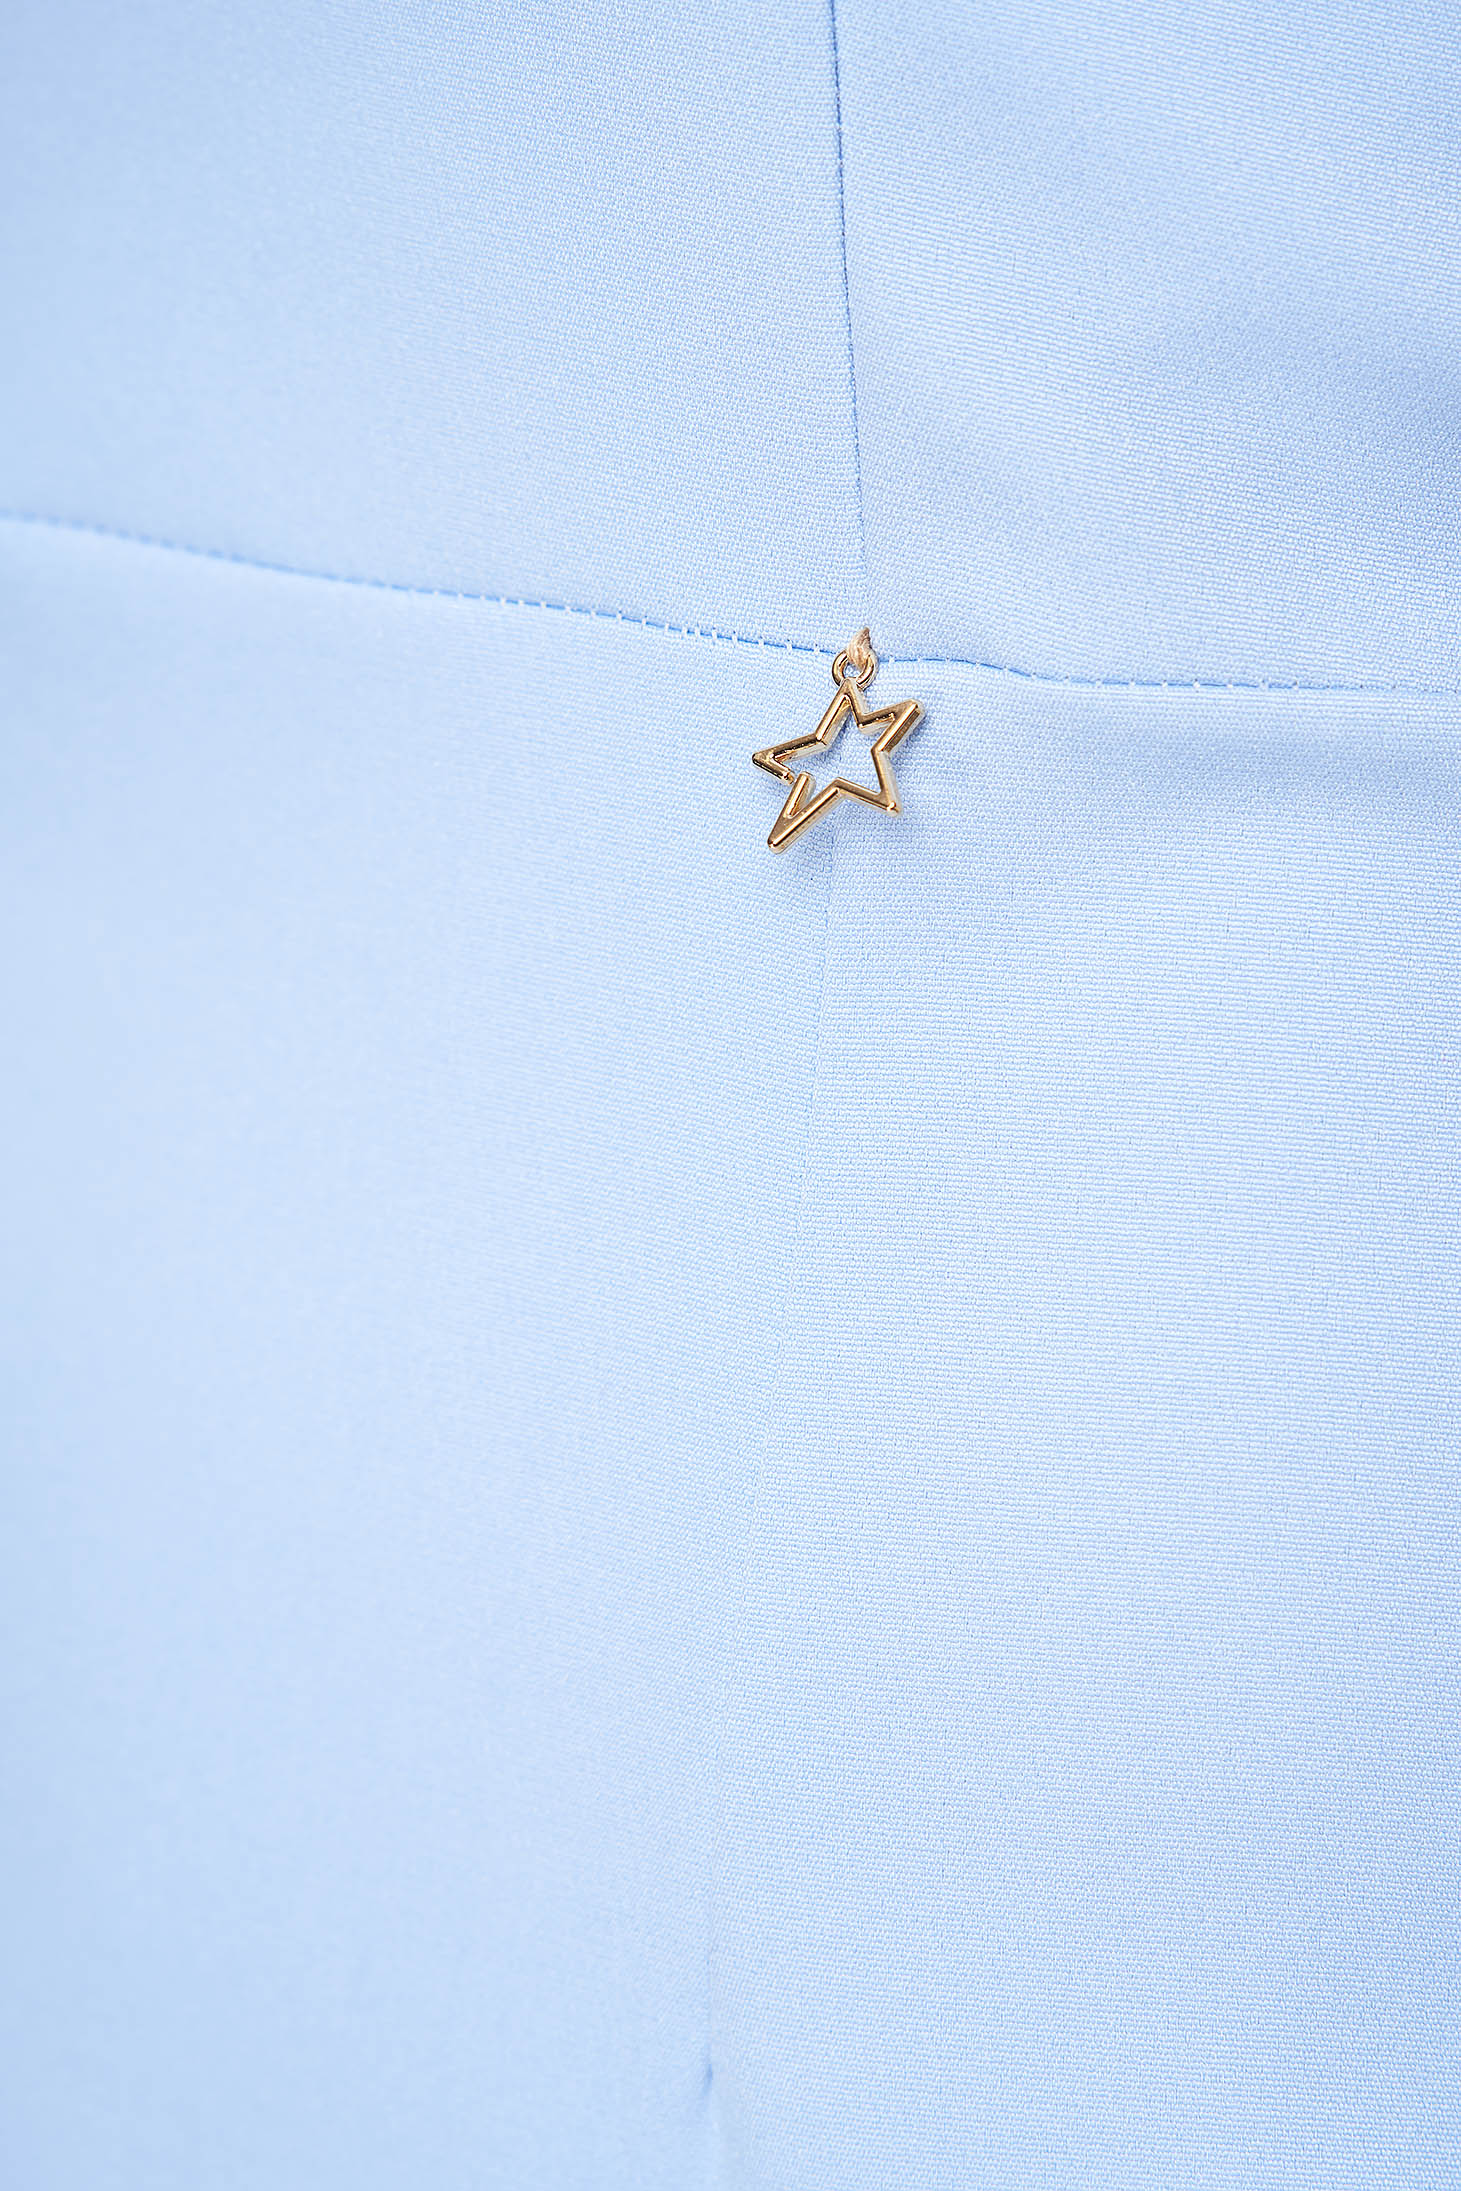 Rochie din stofa usor elastica albastru-deschis tip creion fara maneci - StarShinerS 6 - StarShinerS.ro